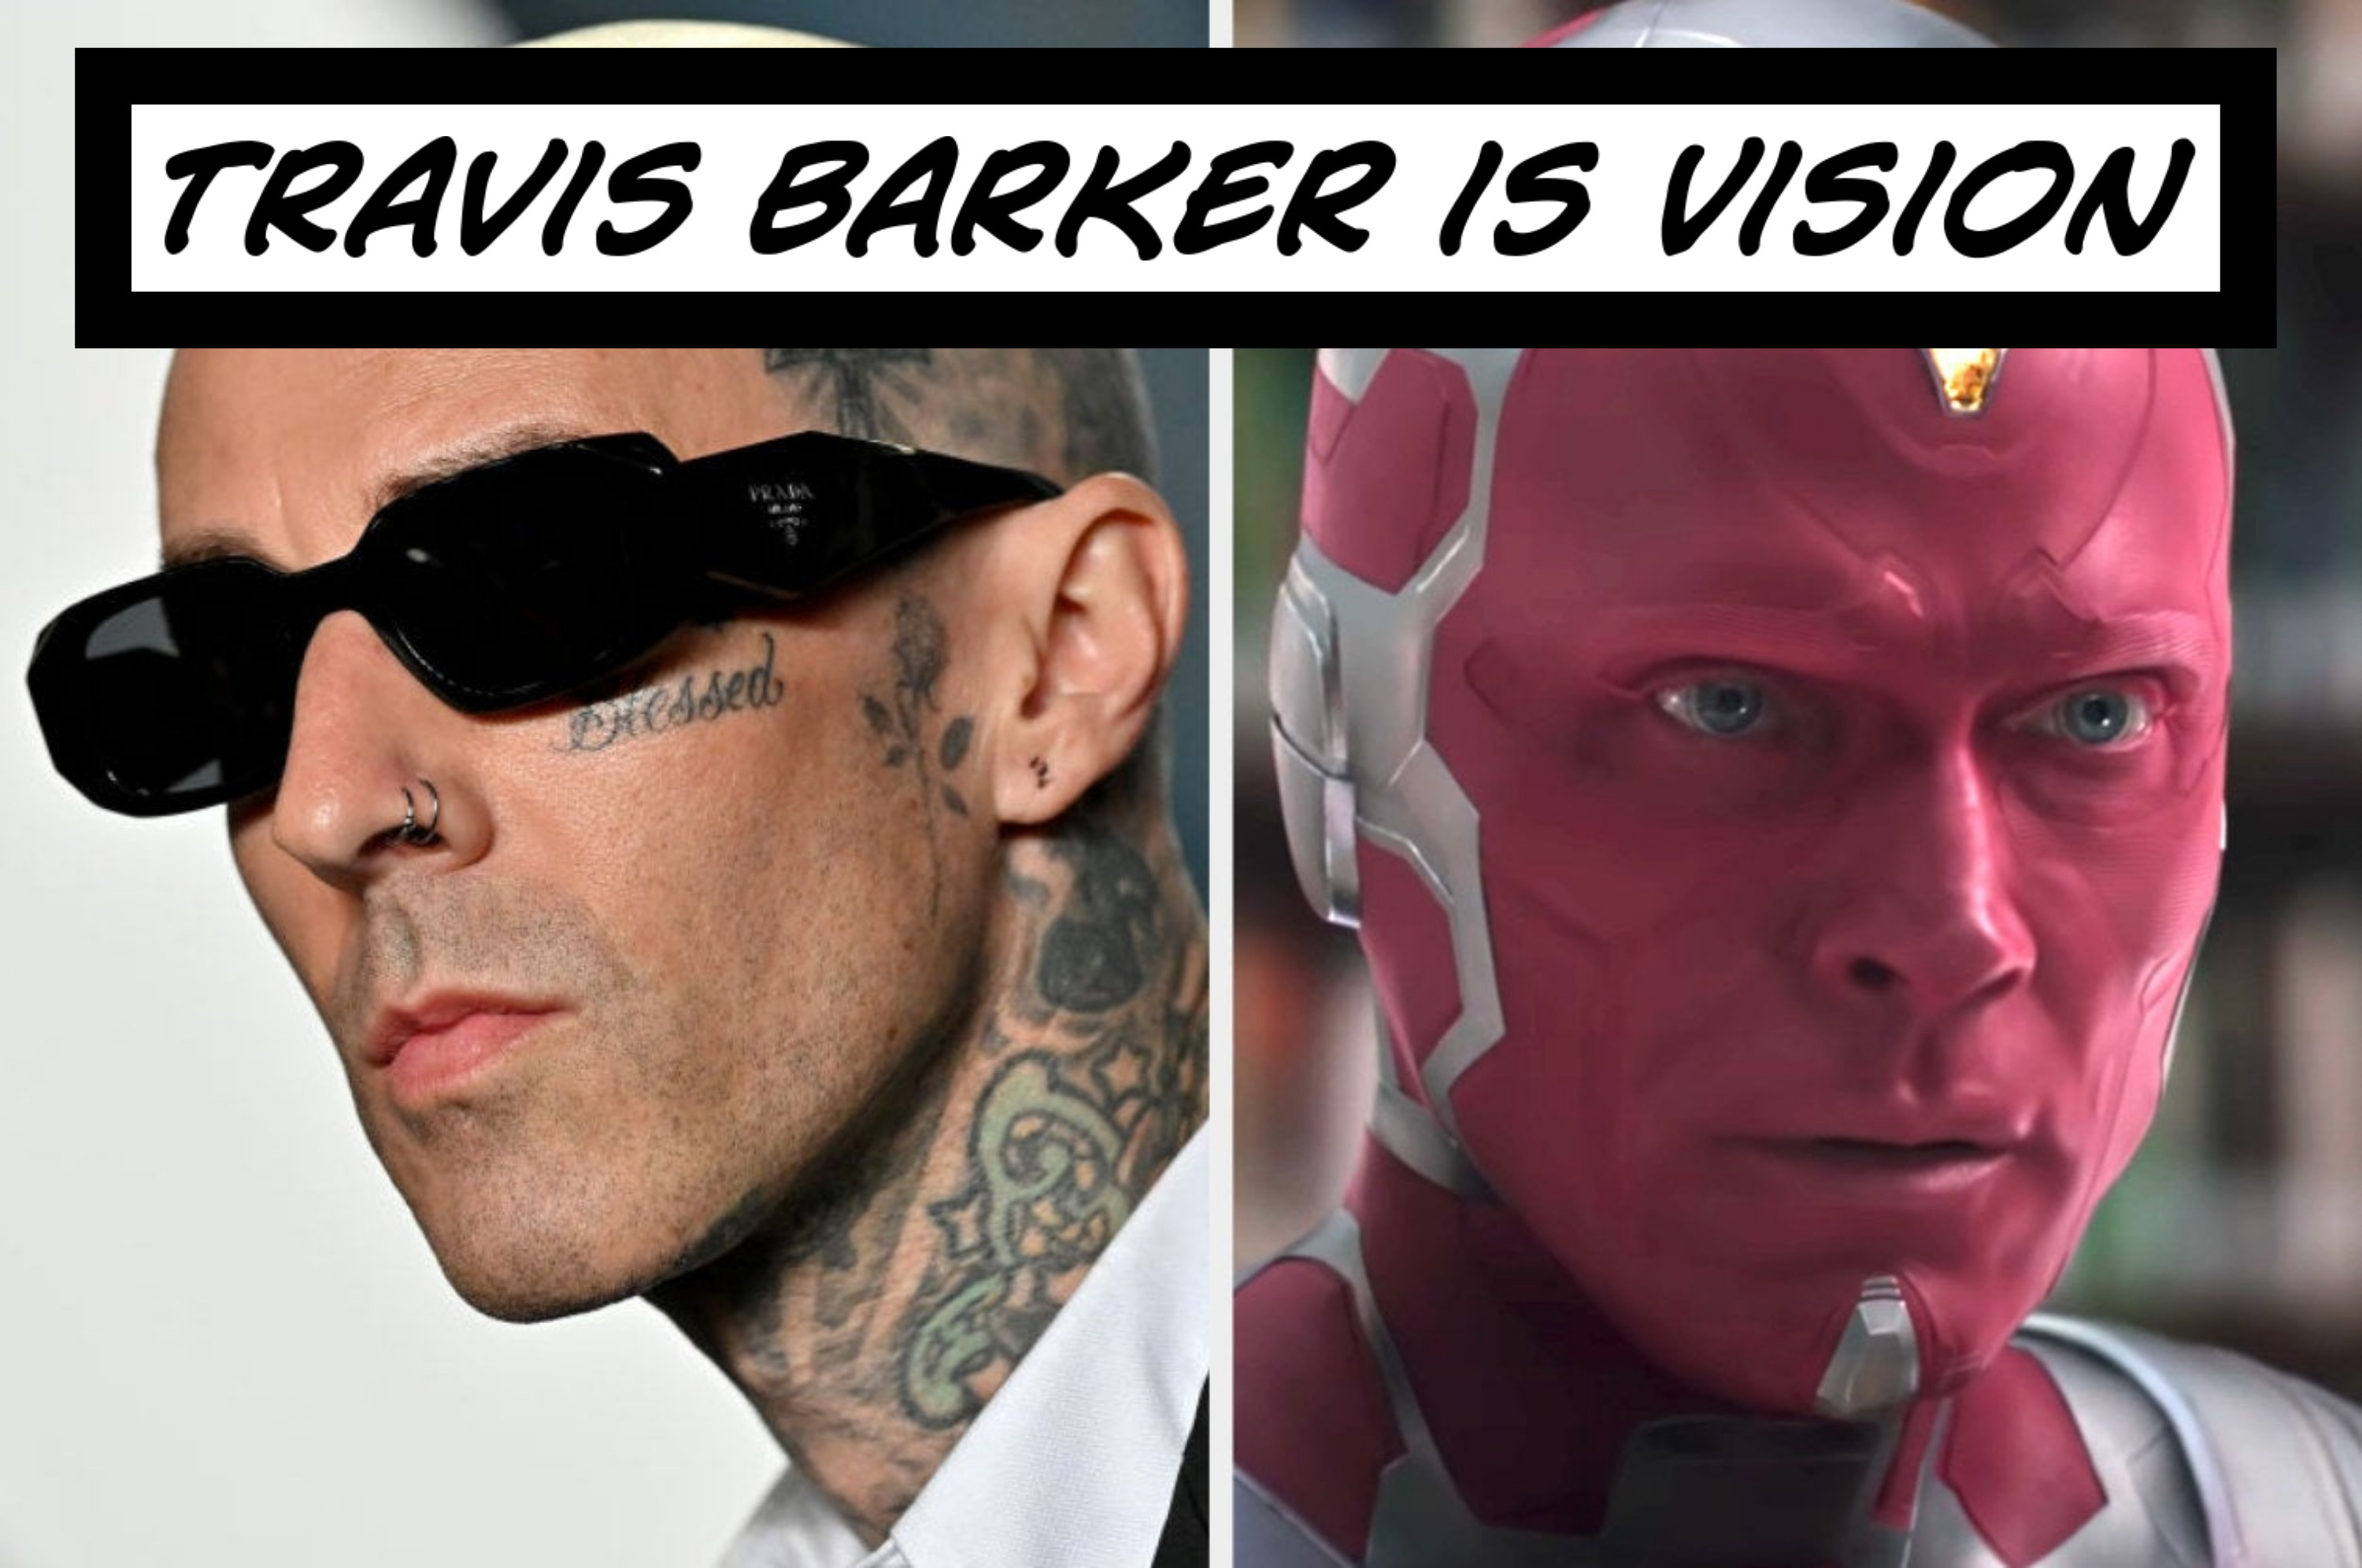 Travis Barker as Vision